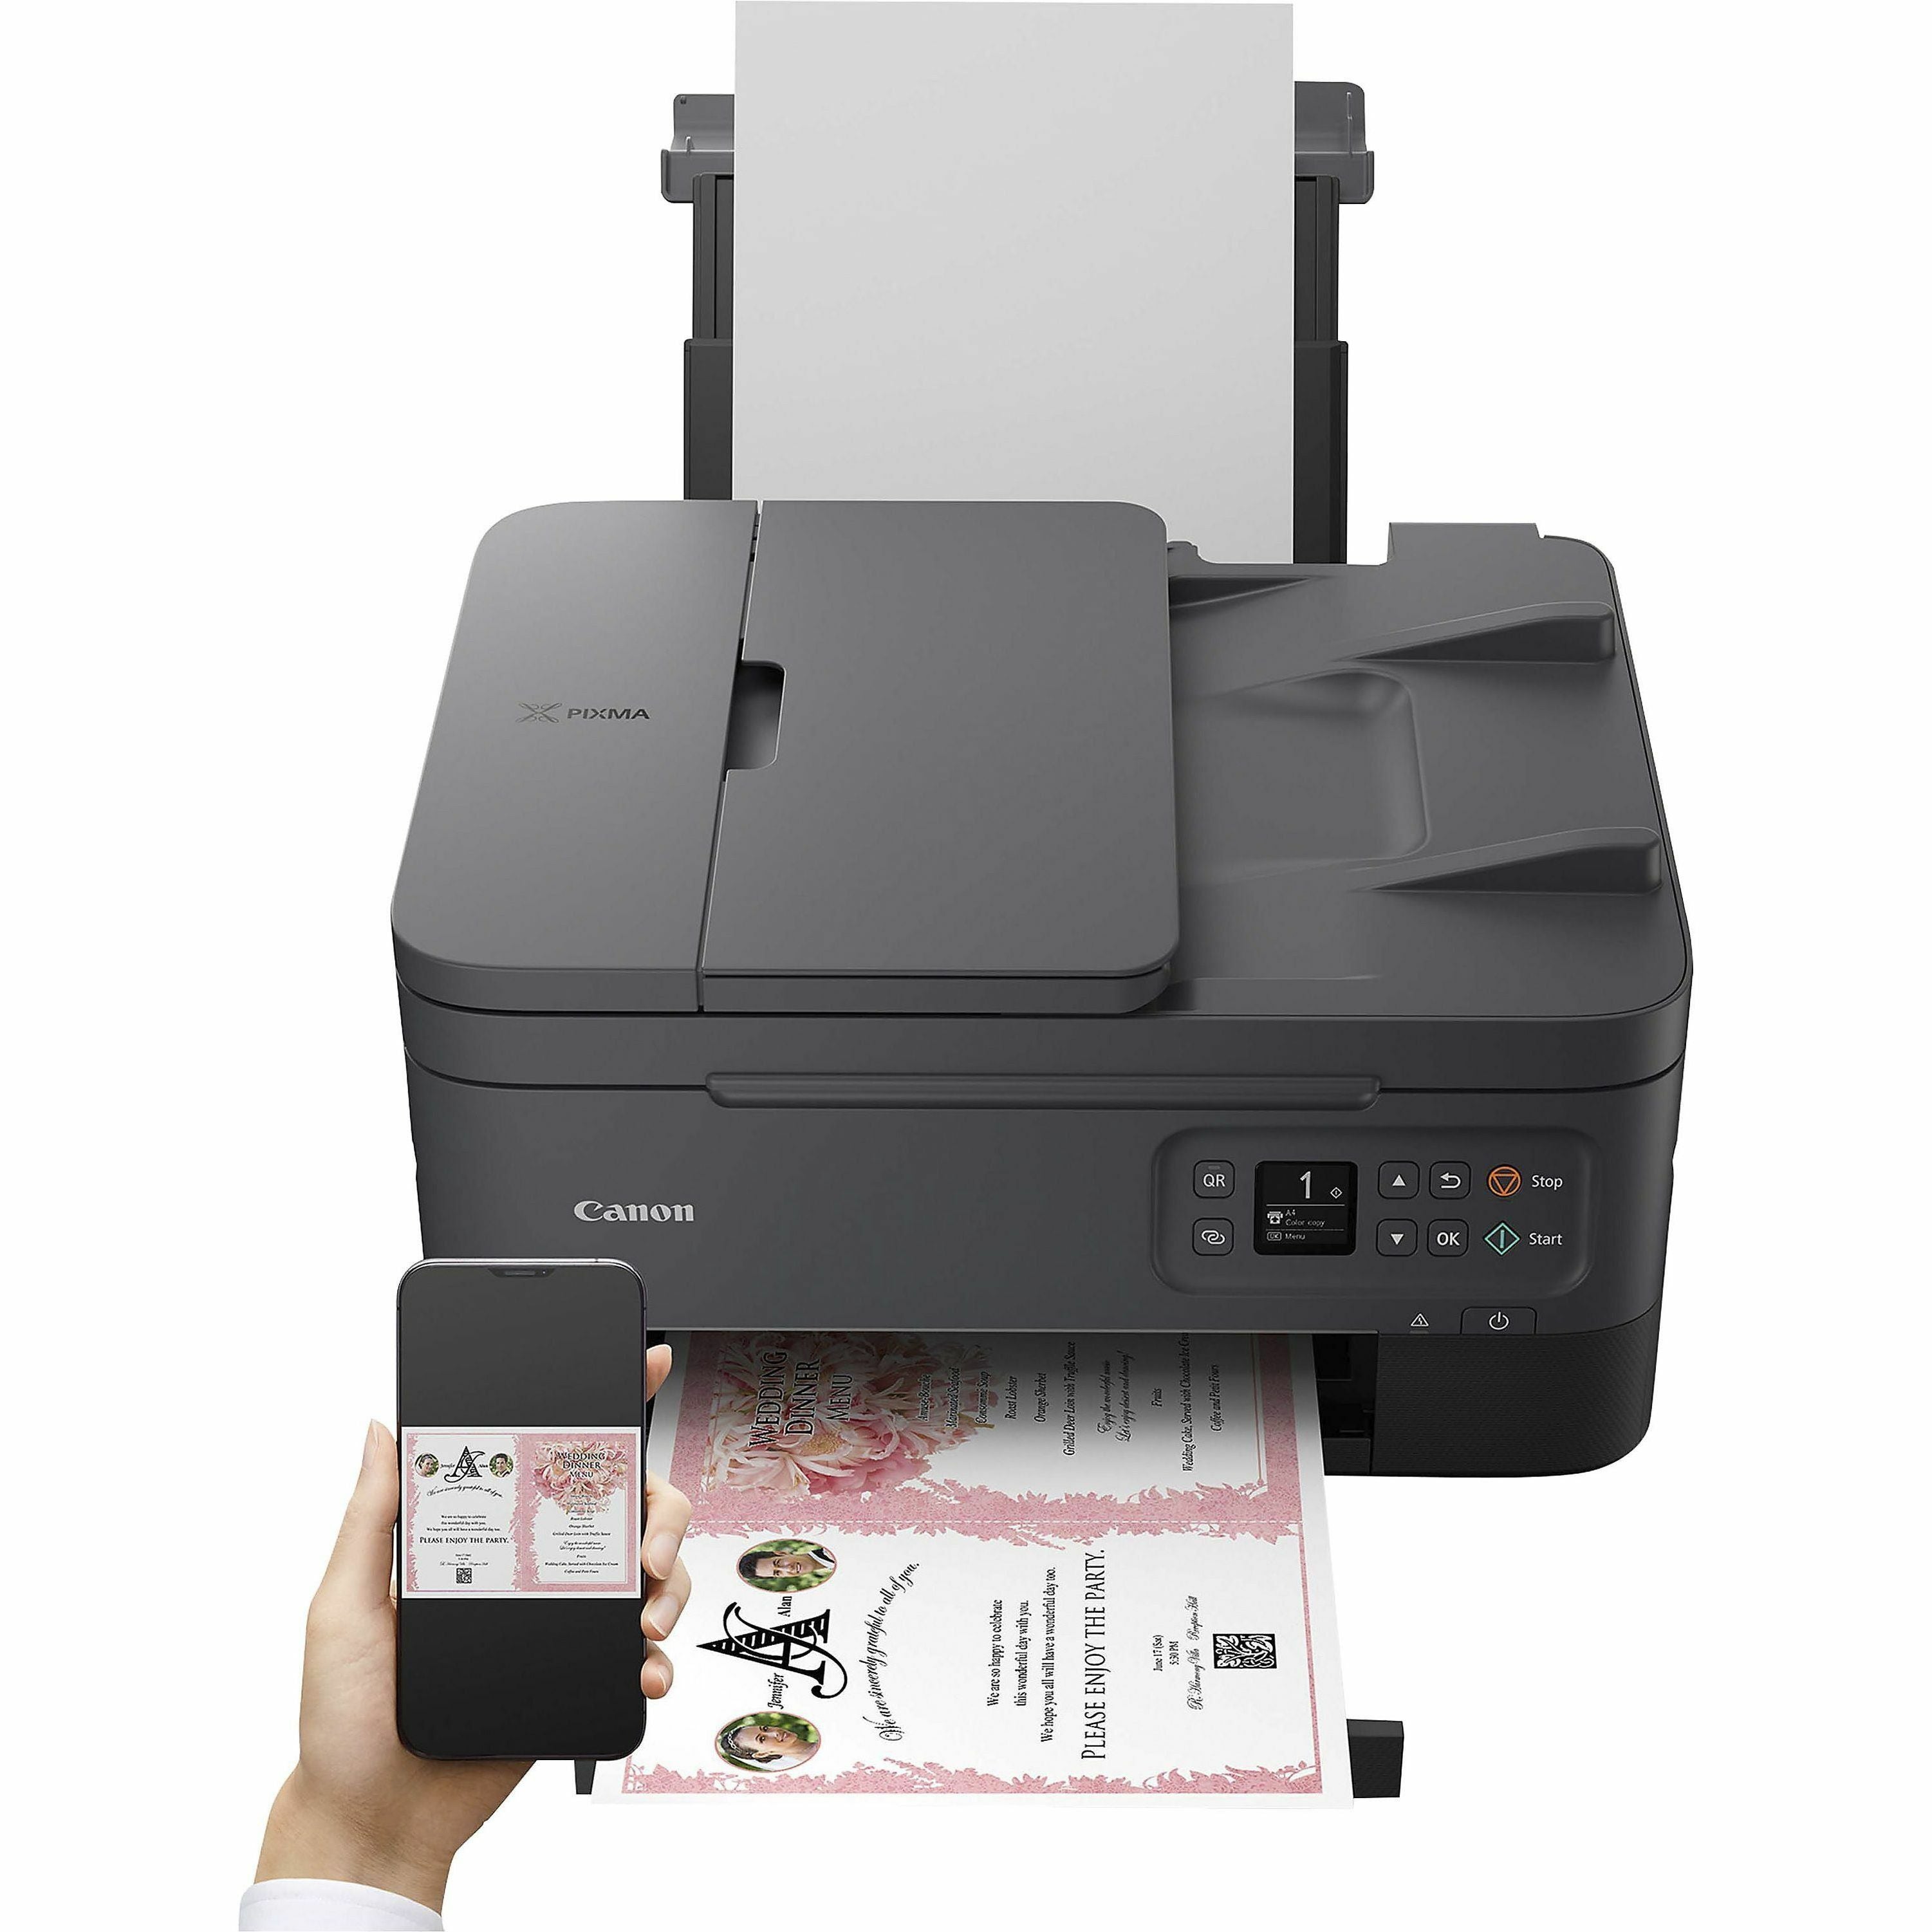 canon-ts702a-wireless-inkjet-printer-color-ink-tank-system-4800-x-1200-dpi-print-automatic-duplex-print-350-sheets-input-ethernet-wireless-lan-wireless-pictbridge-photo-print-ethernet-usb_cnmts702a - 6